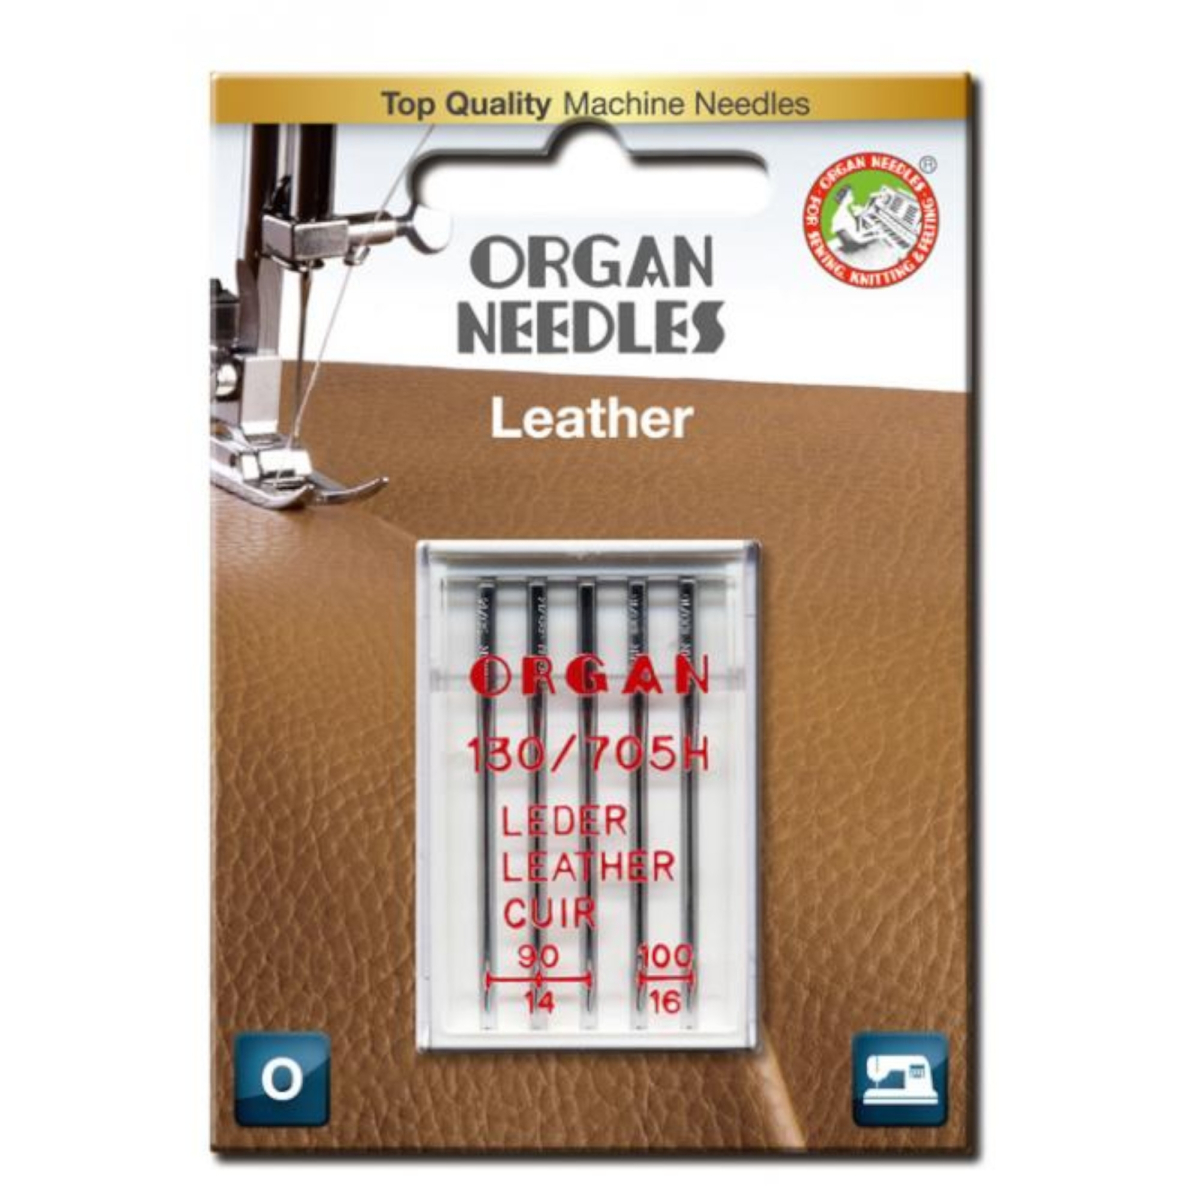 Organ Sewing Machine Needles 130/705 H, Leather 90-100